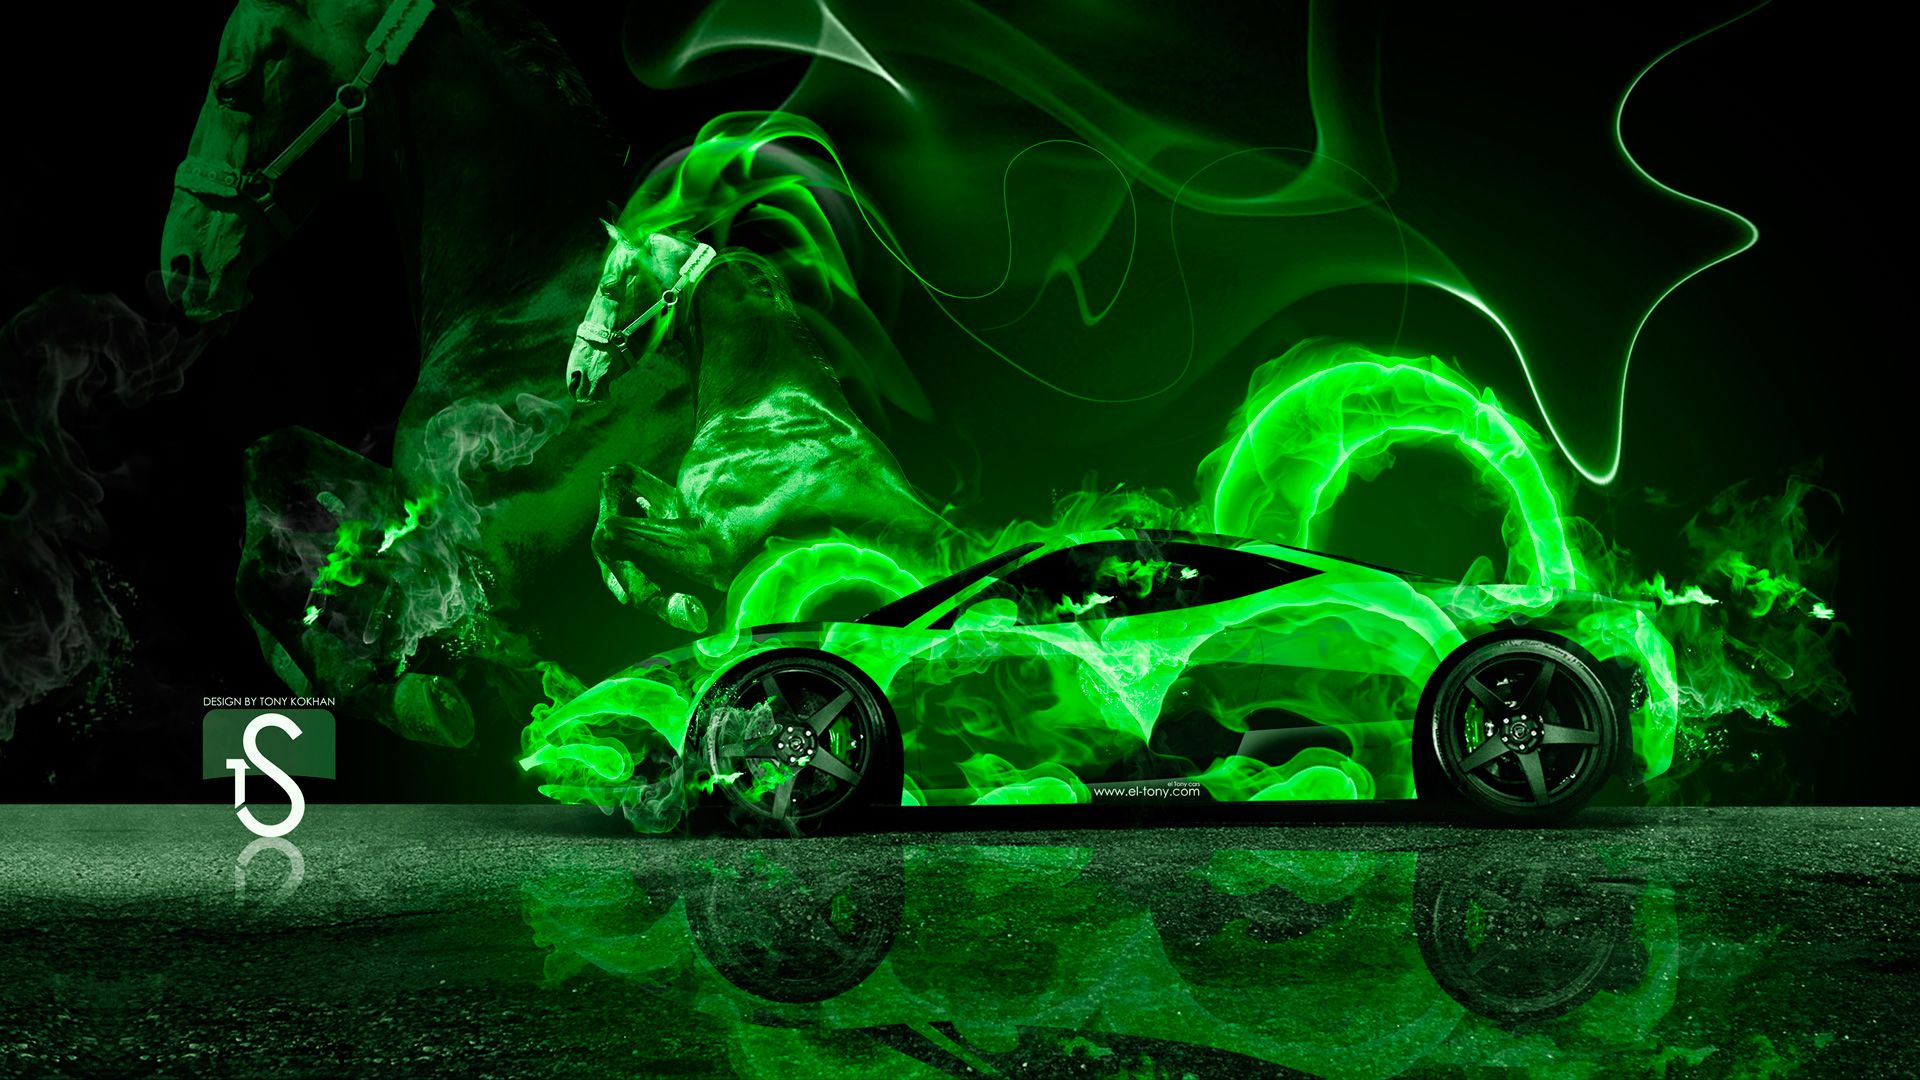 Free download Ferrari Green Fire Horse Car 2014 HD Wallpaper